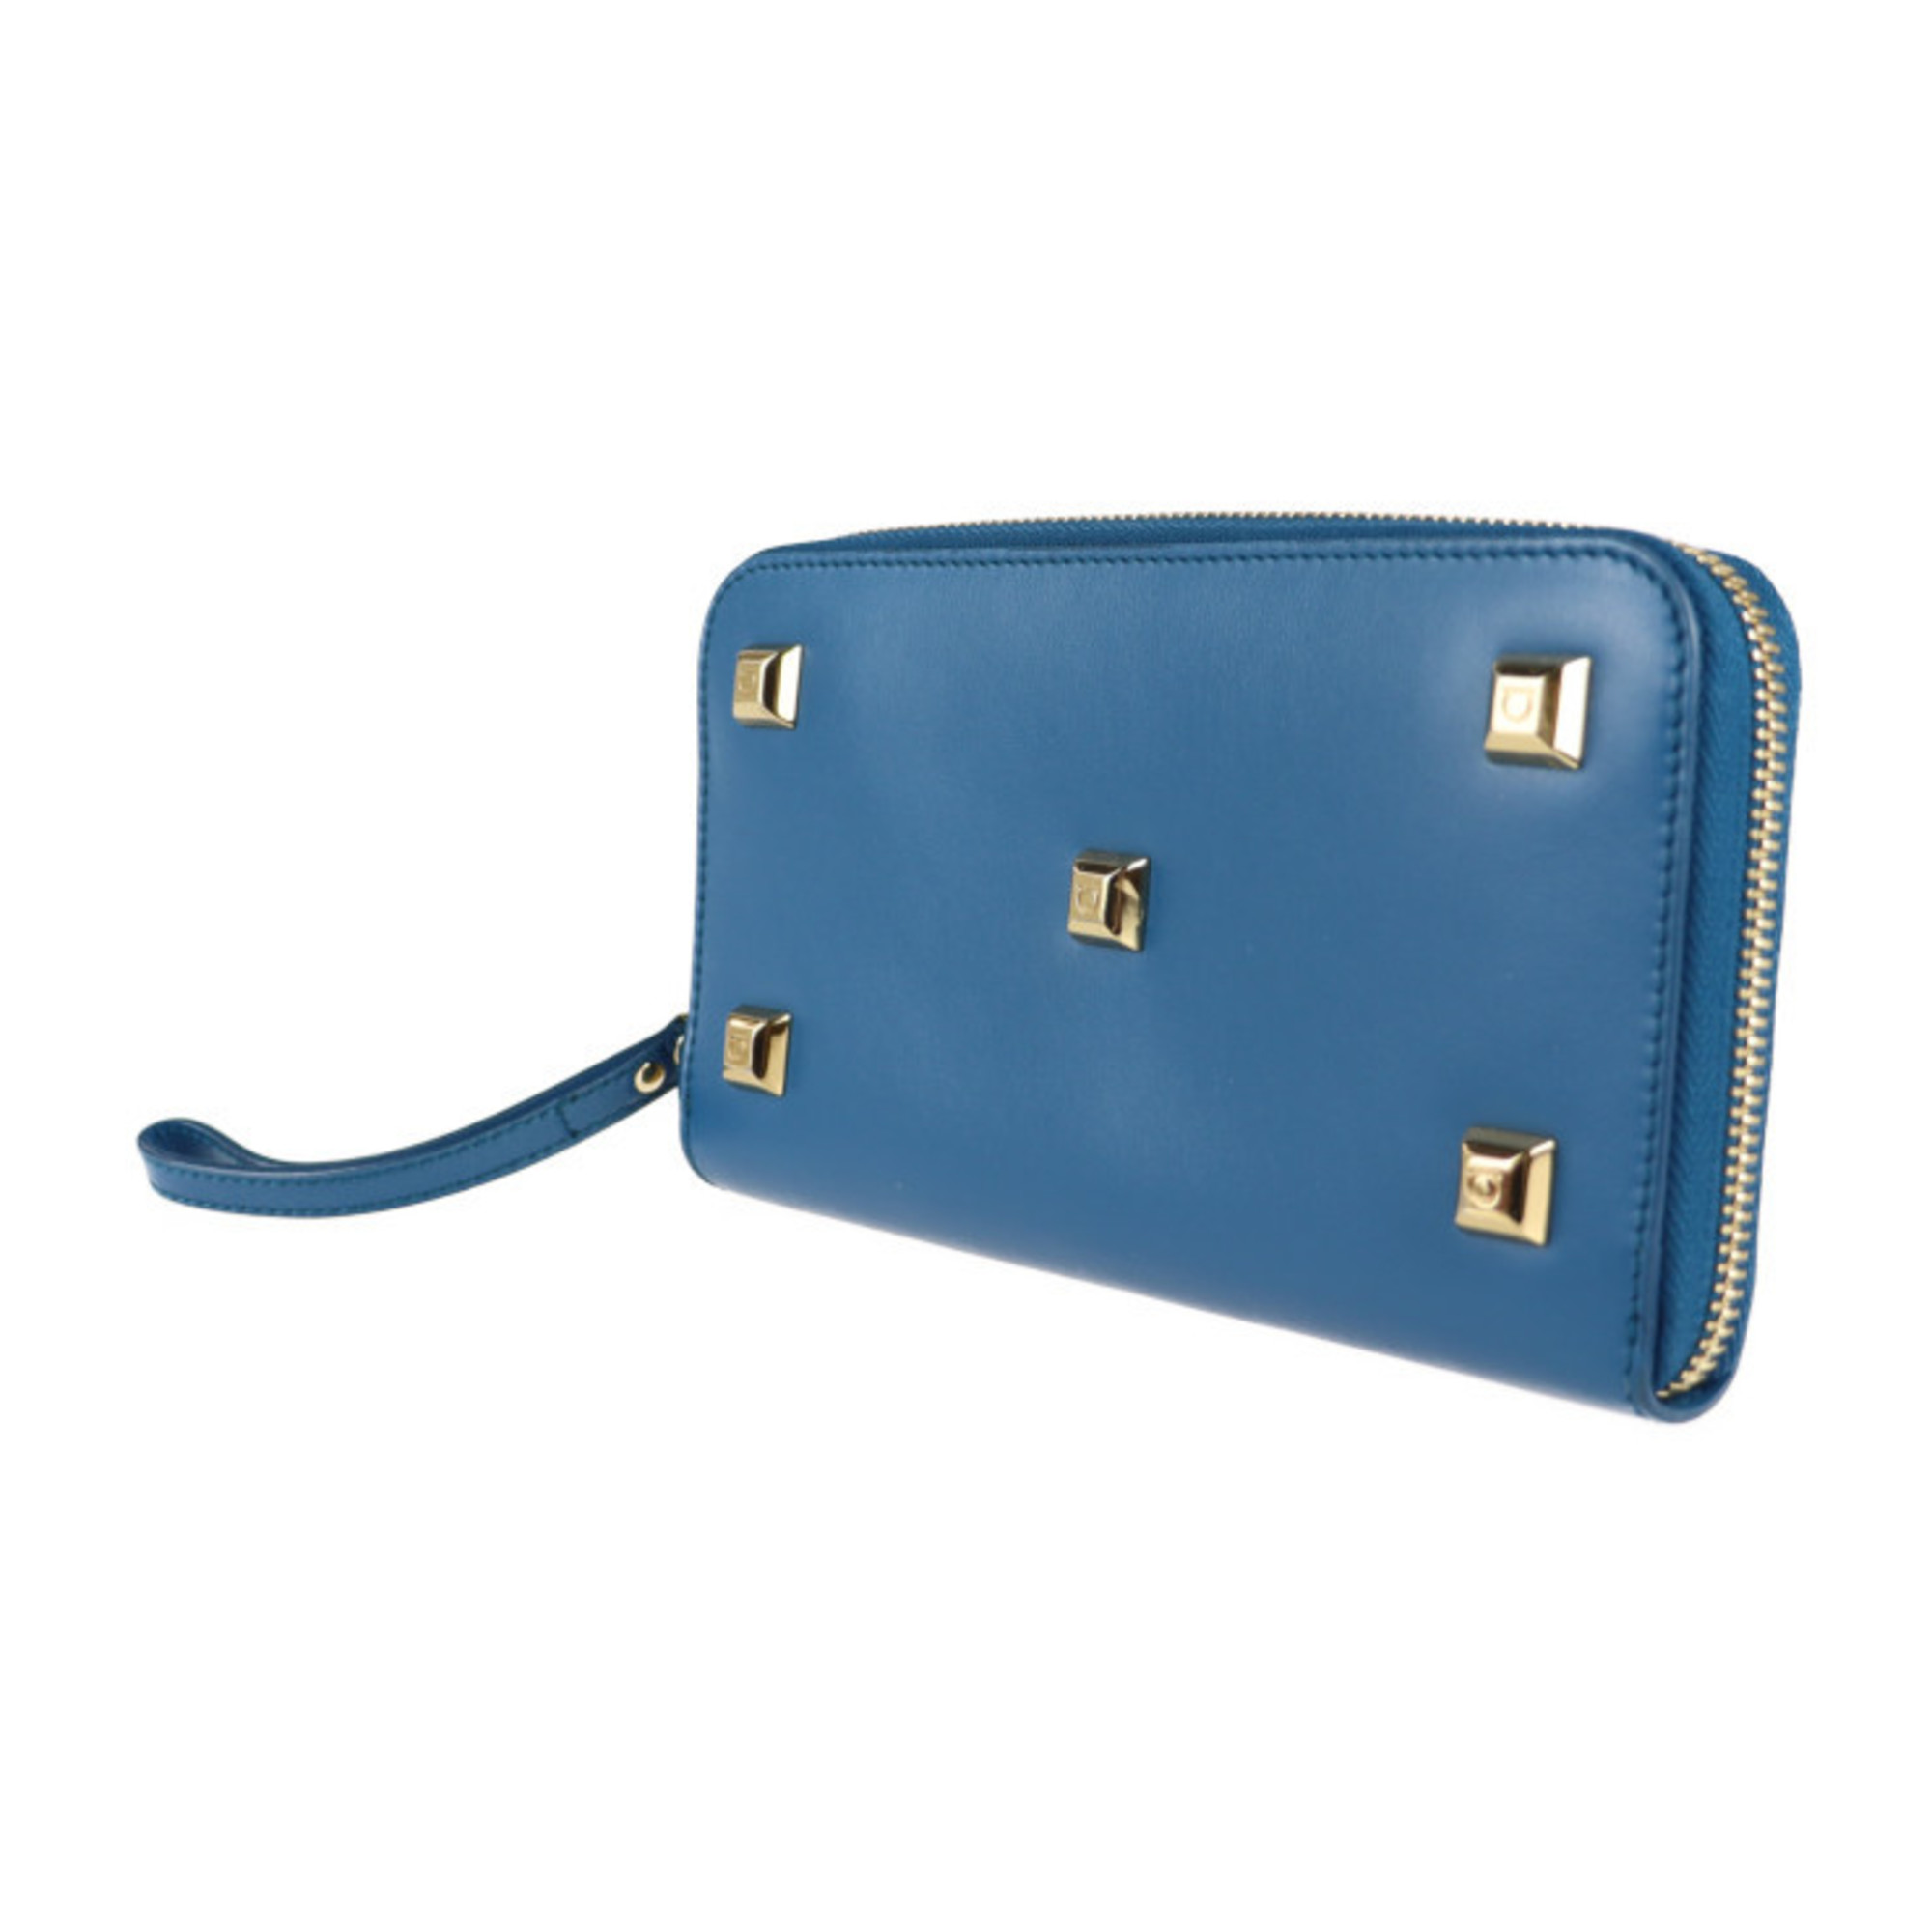 Salvatore Ferragamo Gancini long wallet IY-22 D572 leather blue round zipper